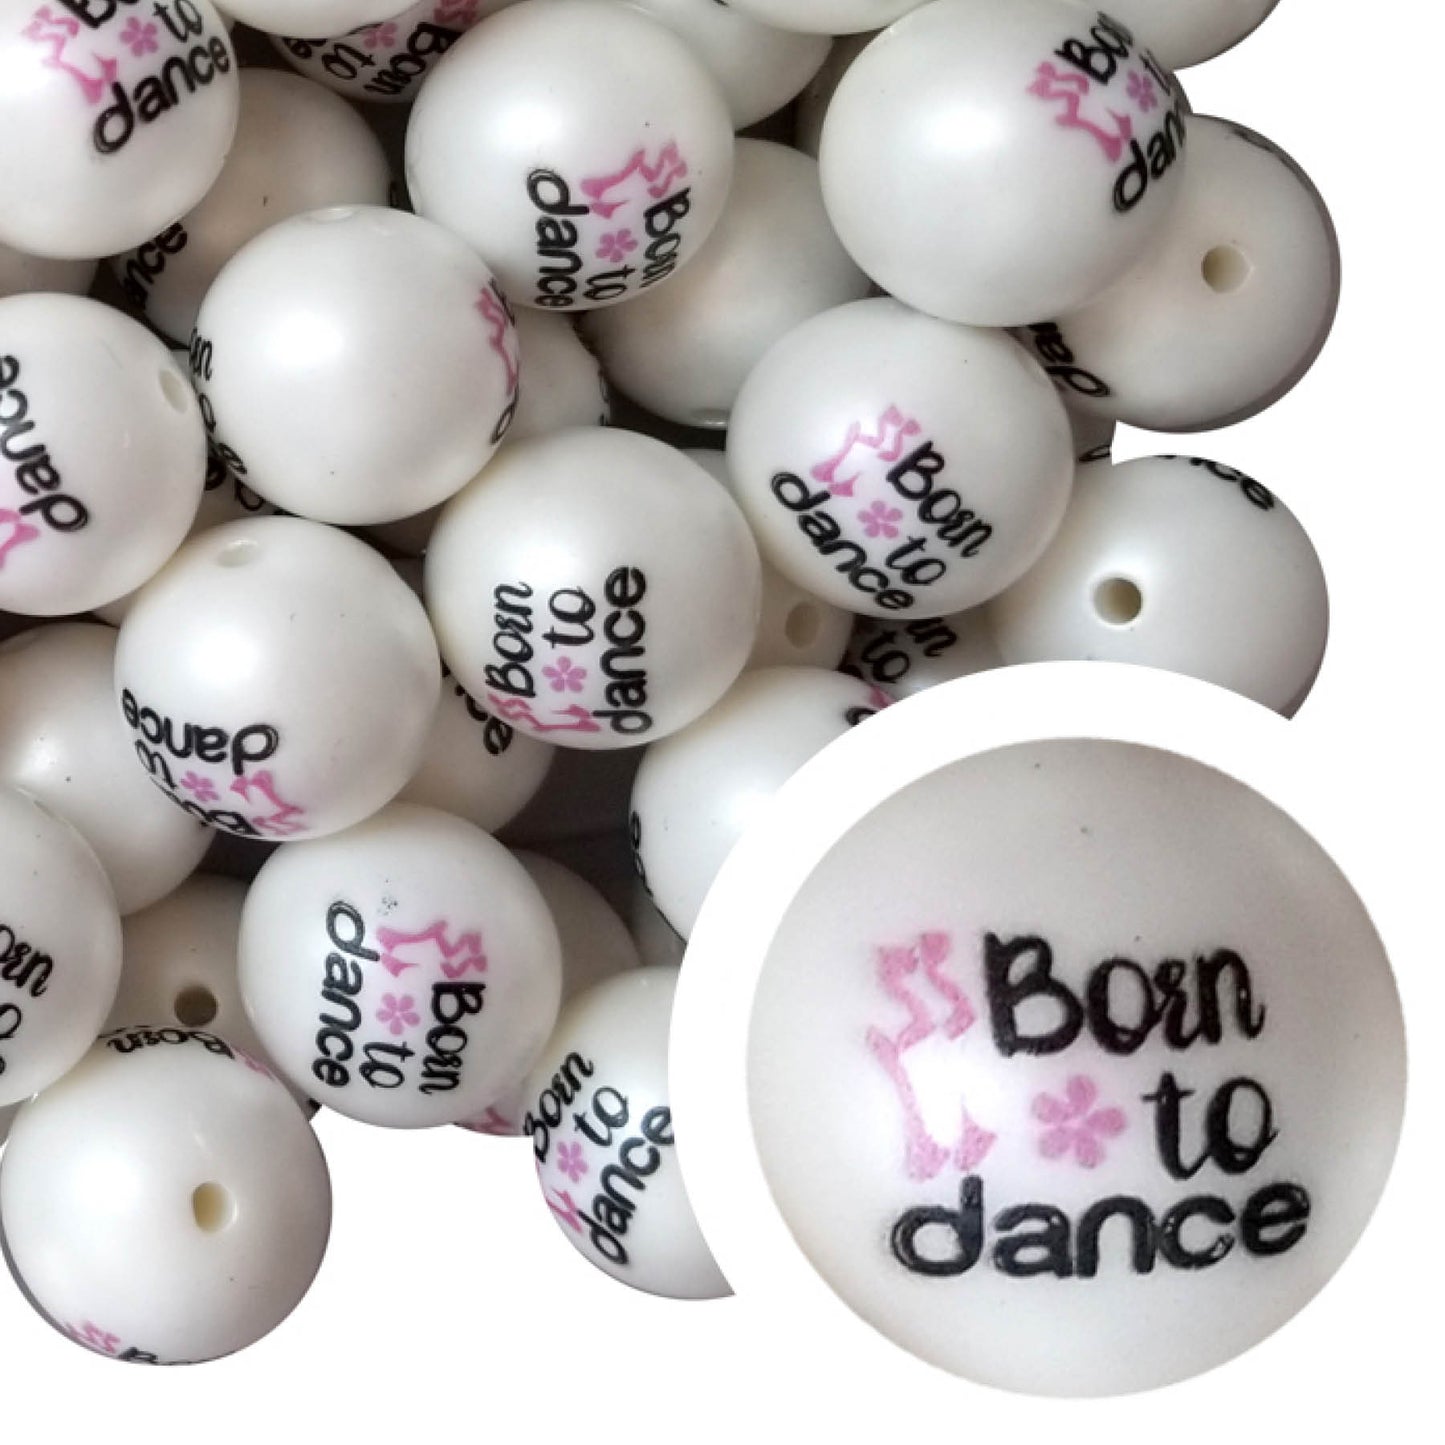 born to dance printed 20mm bubblegum beads